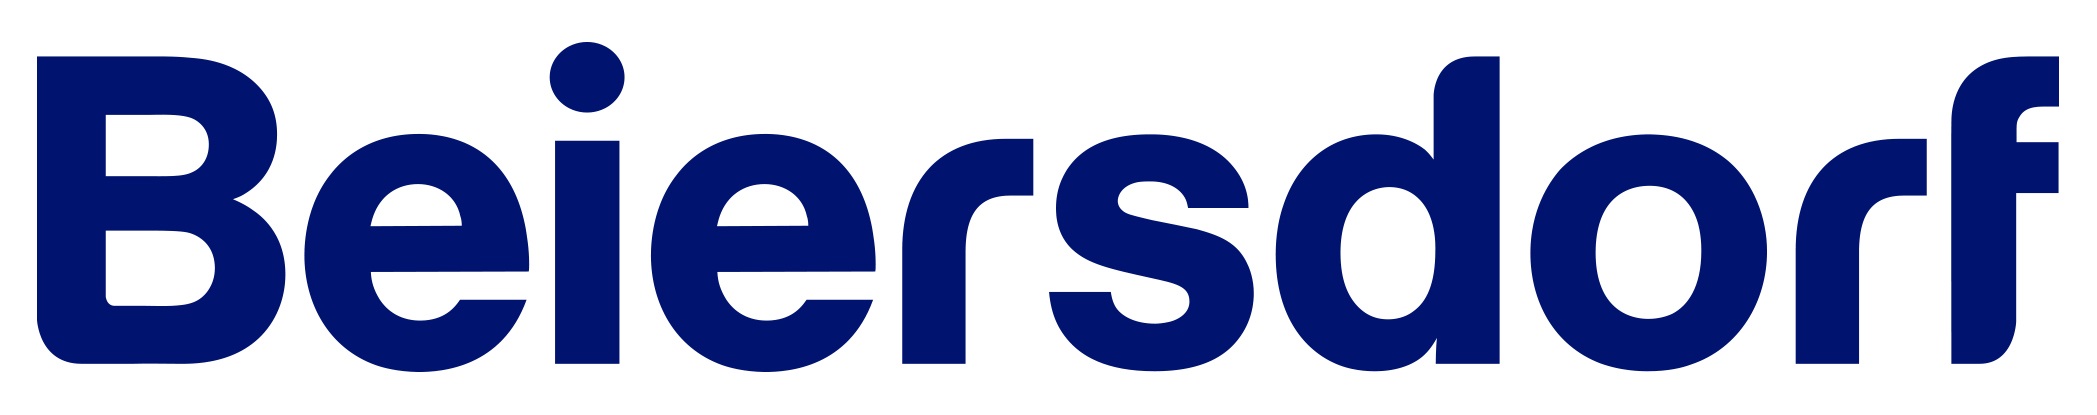 Beiersdorf Logo CorporateBlue